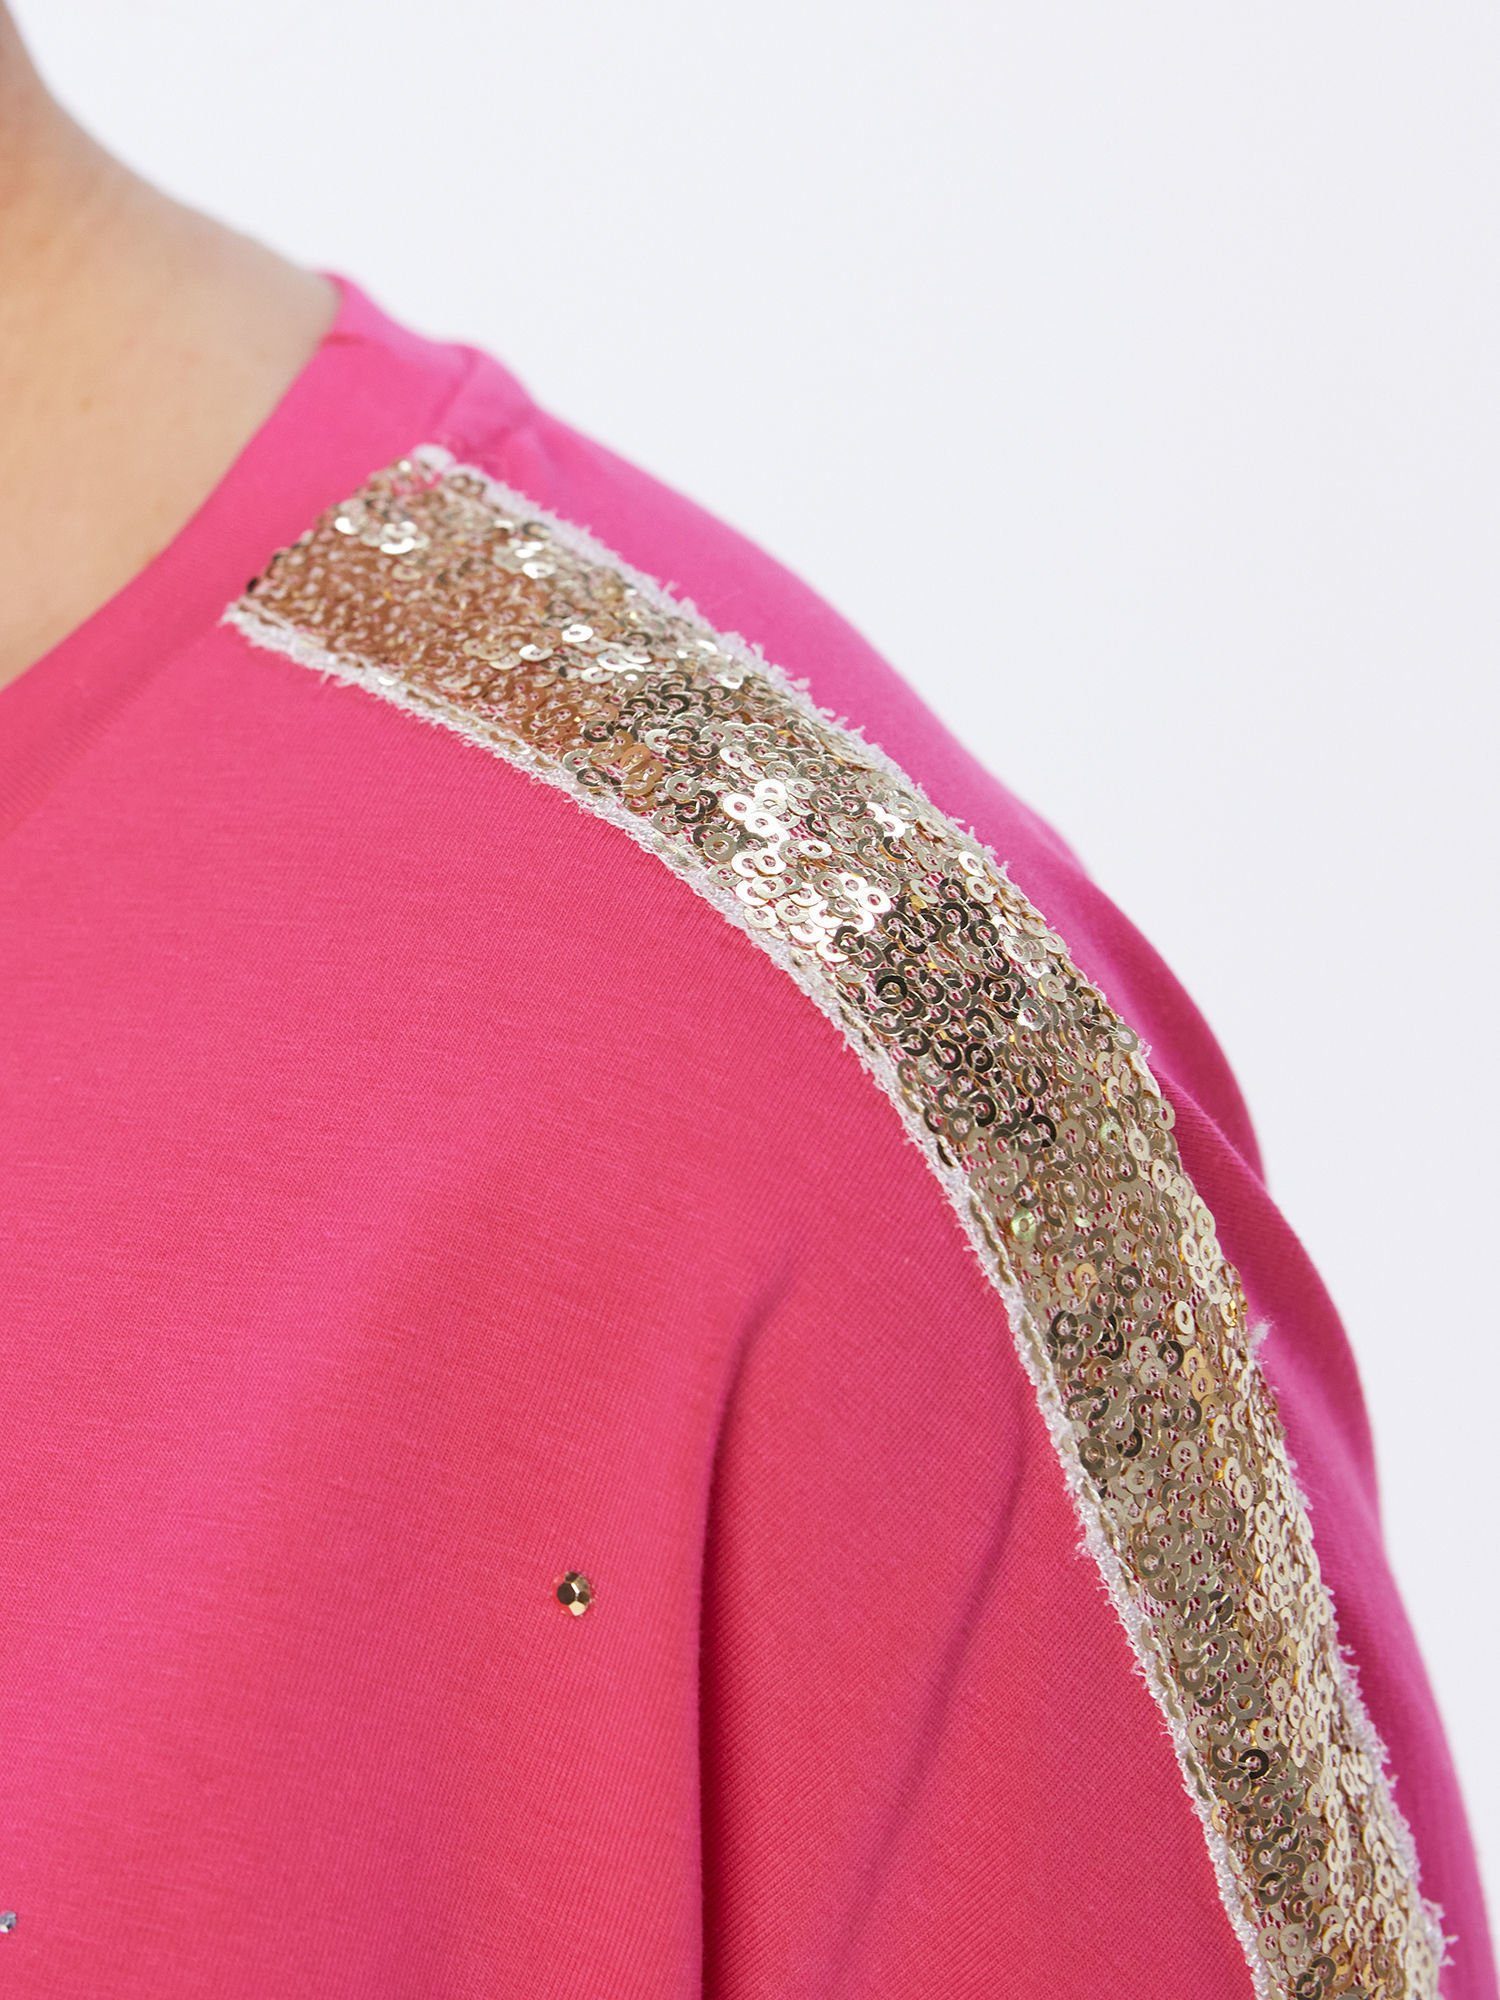 Christian Materne T-Shirt Kurzarmbluse Stern-Motiv mit pink